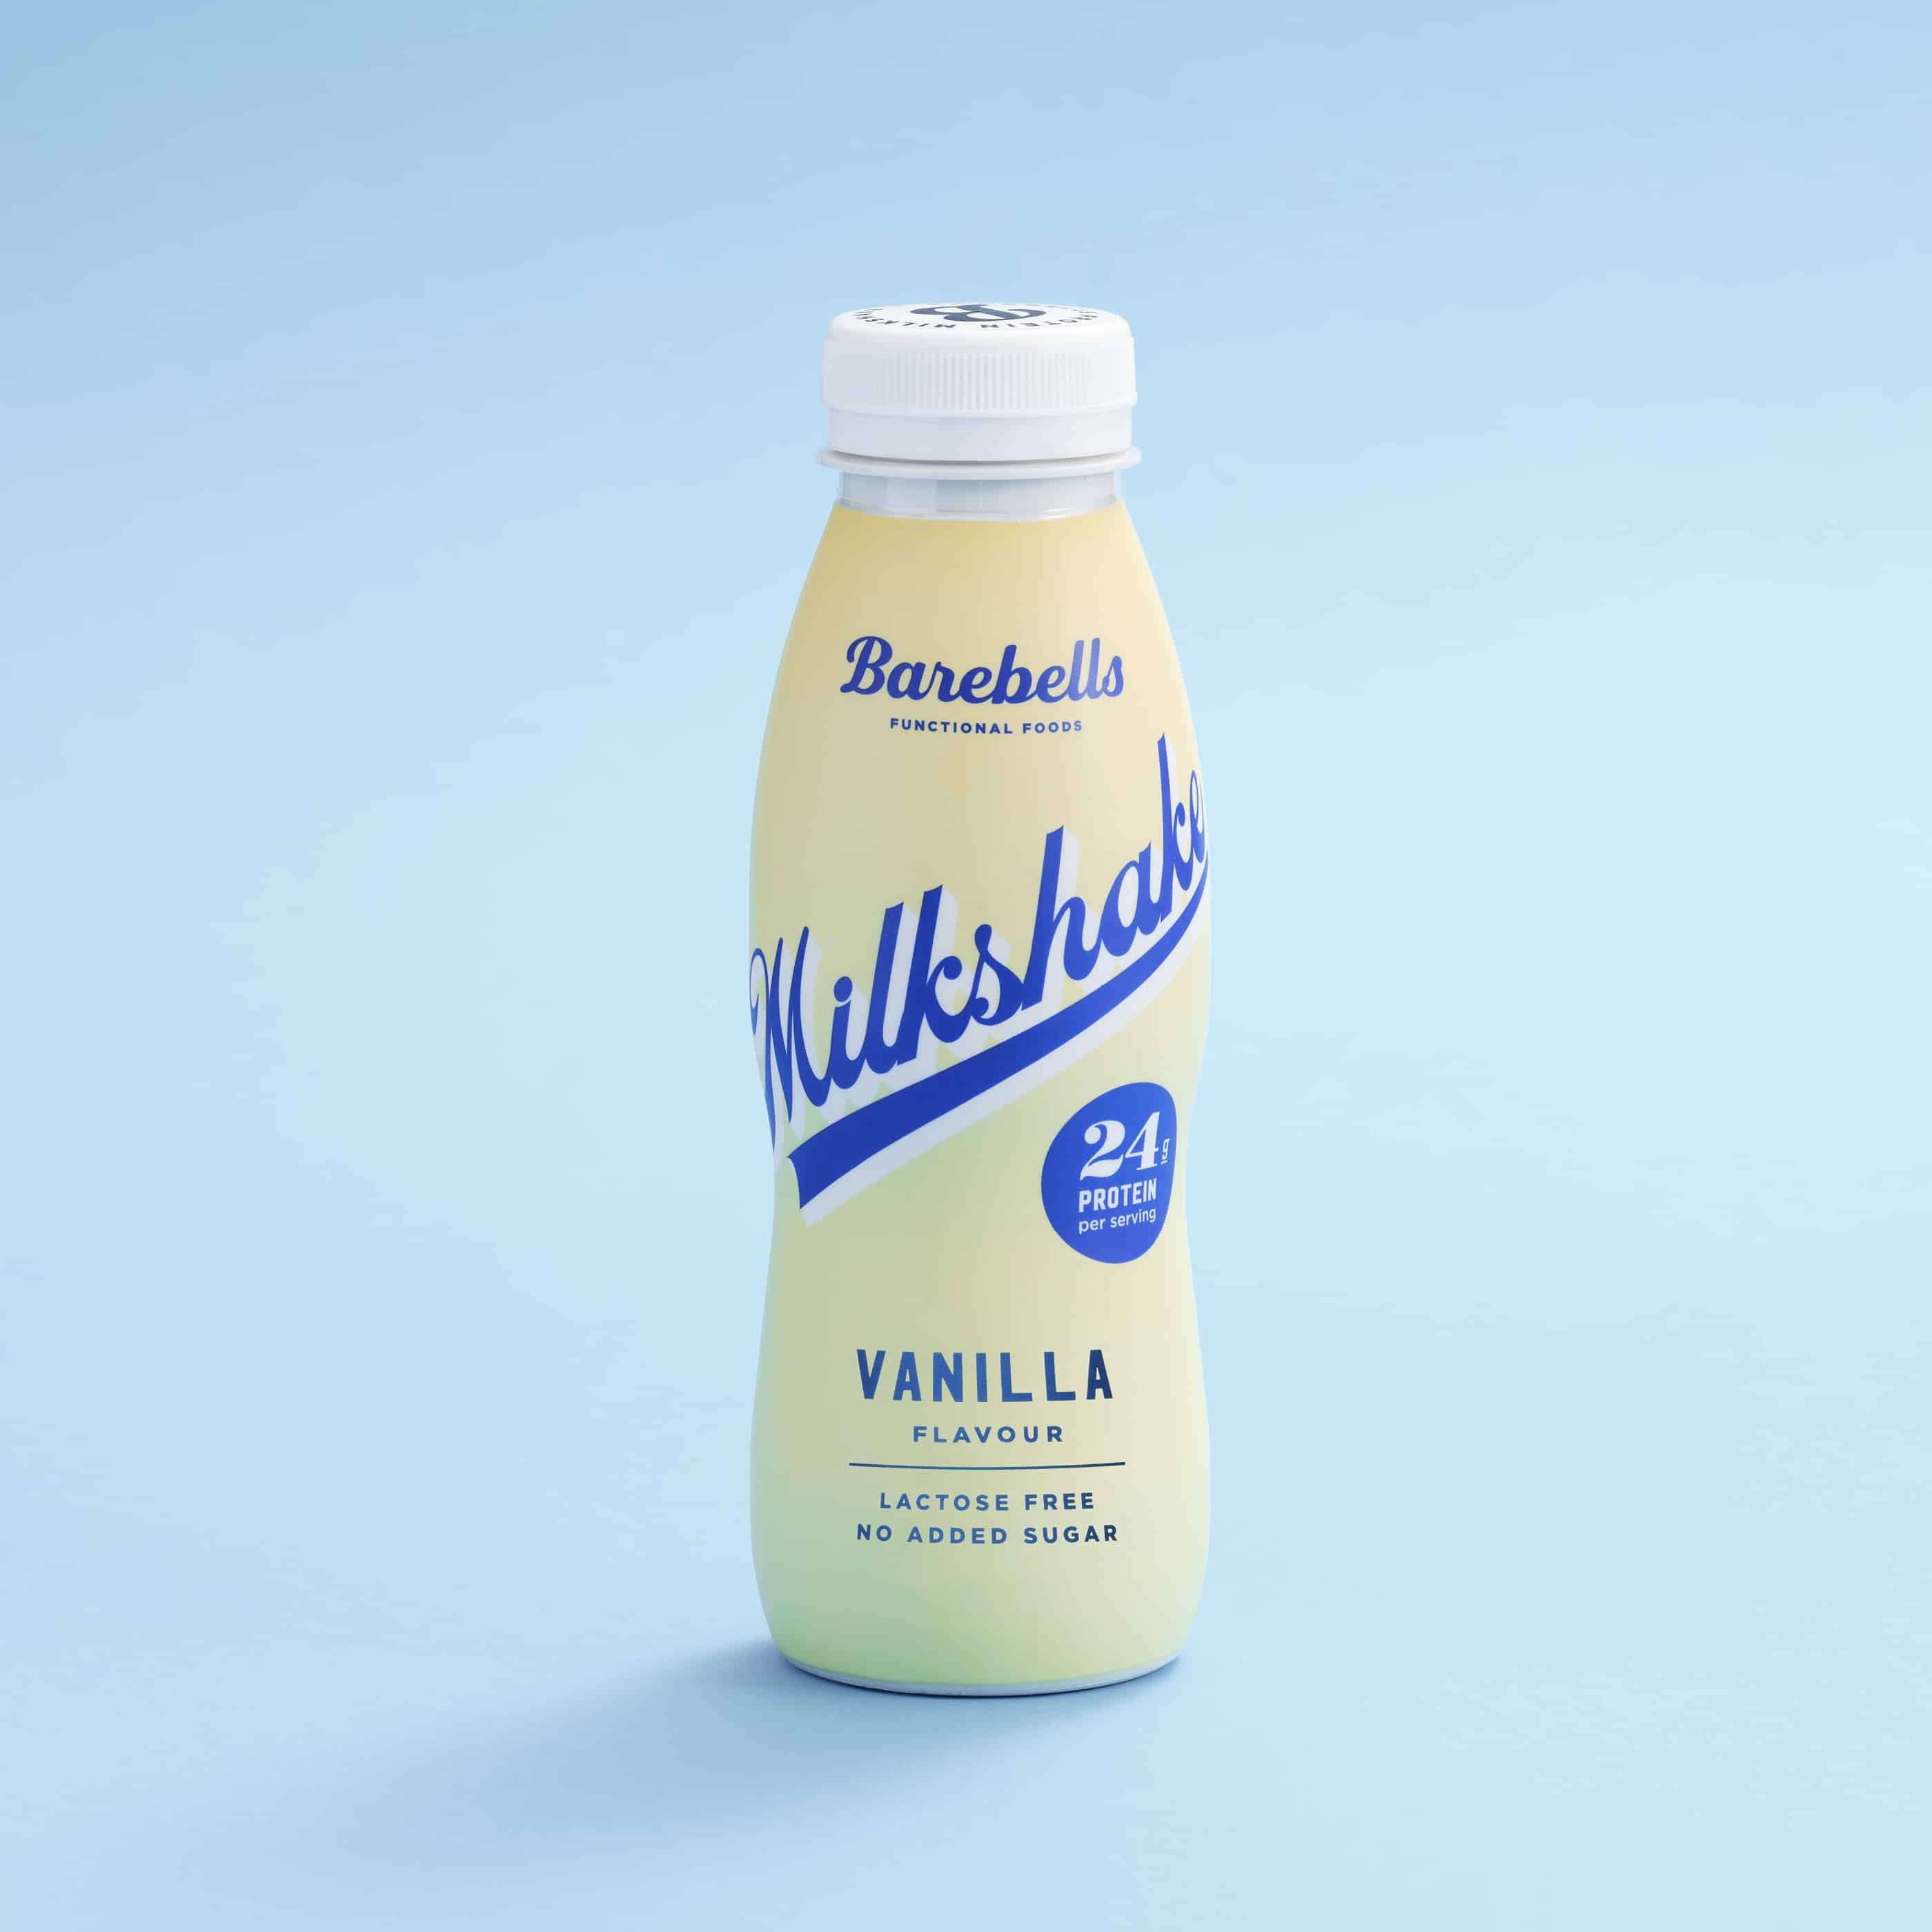 Lactose free vanilla shake from Barebells